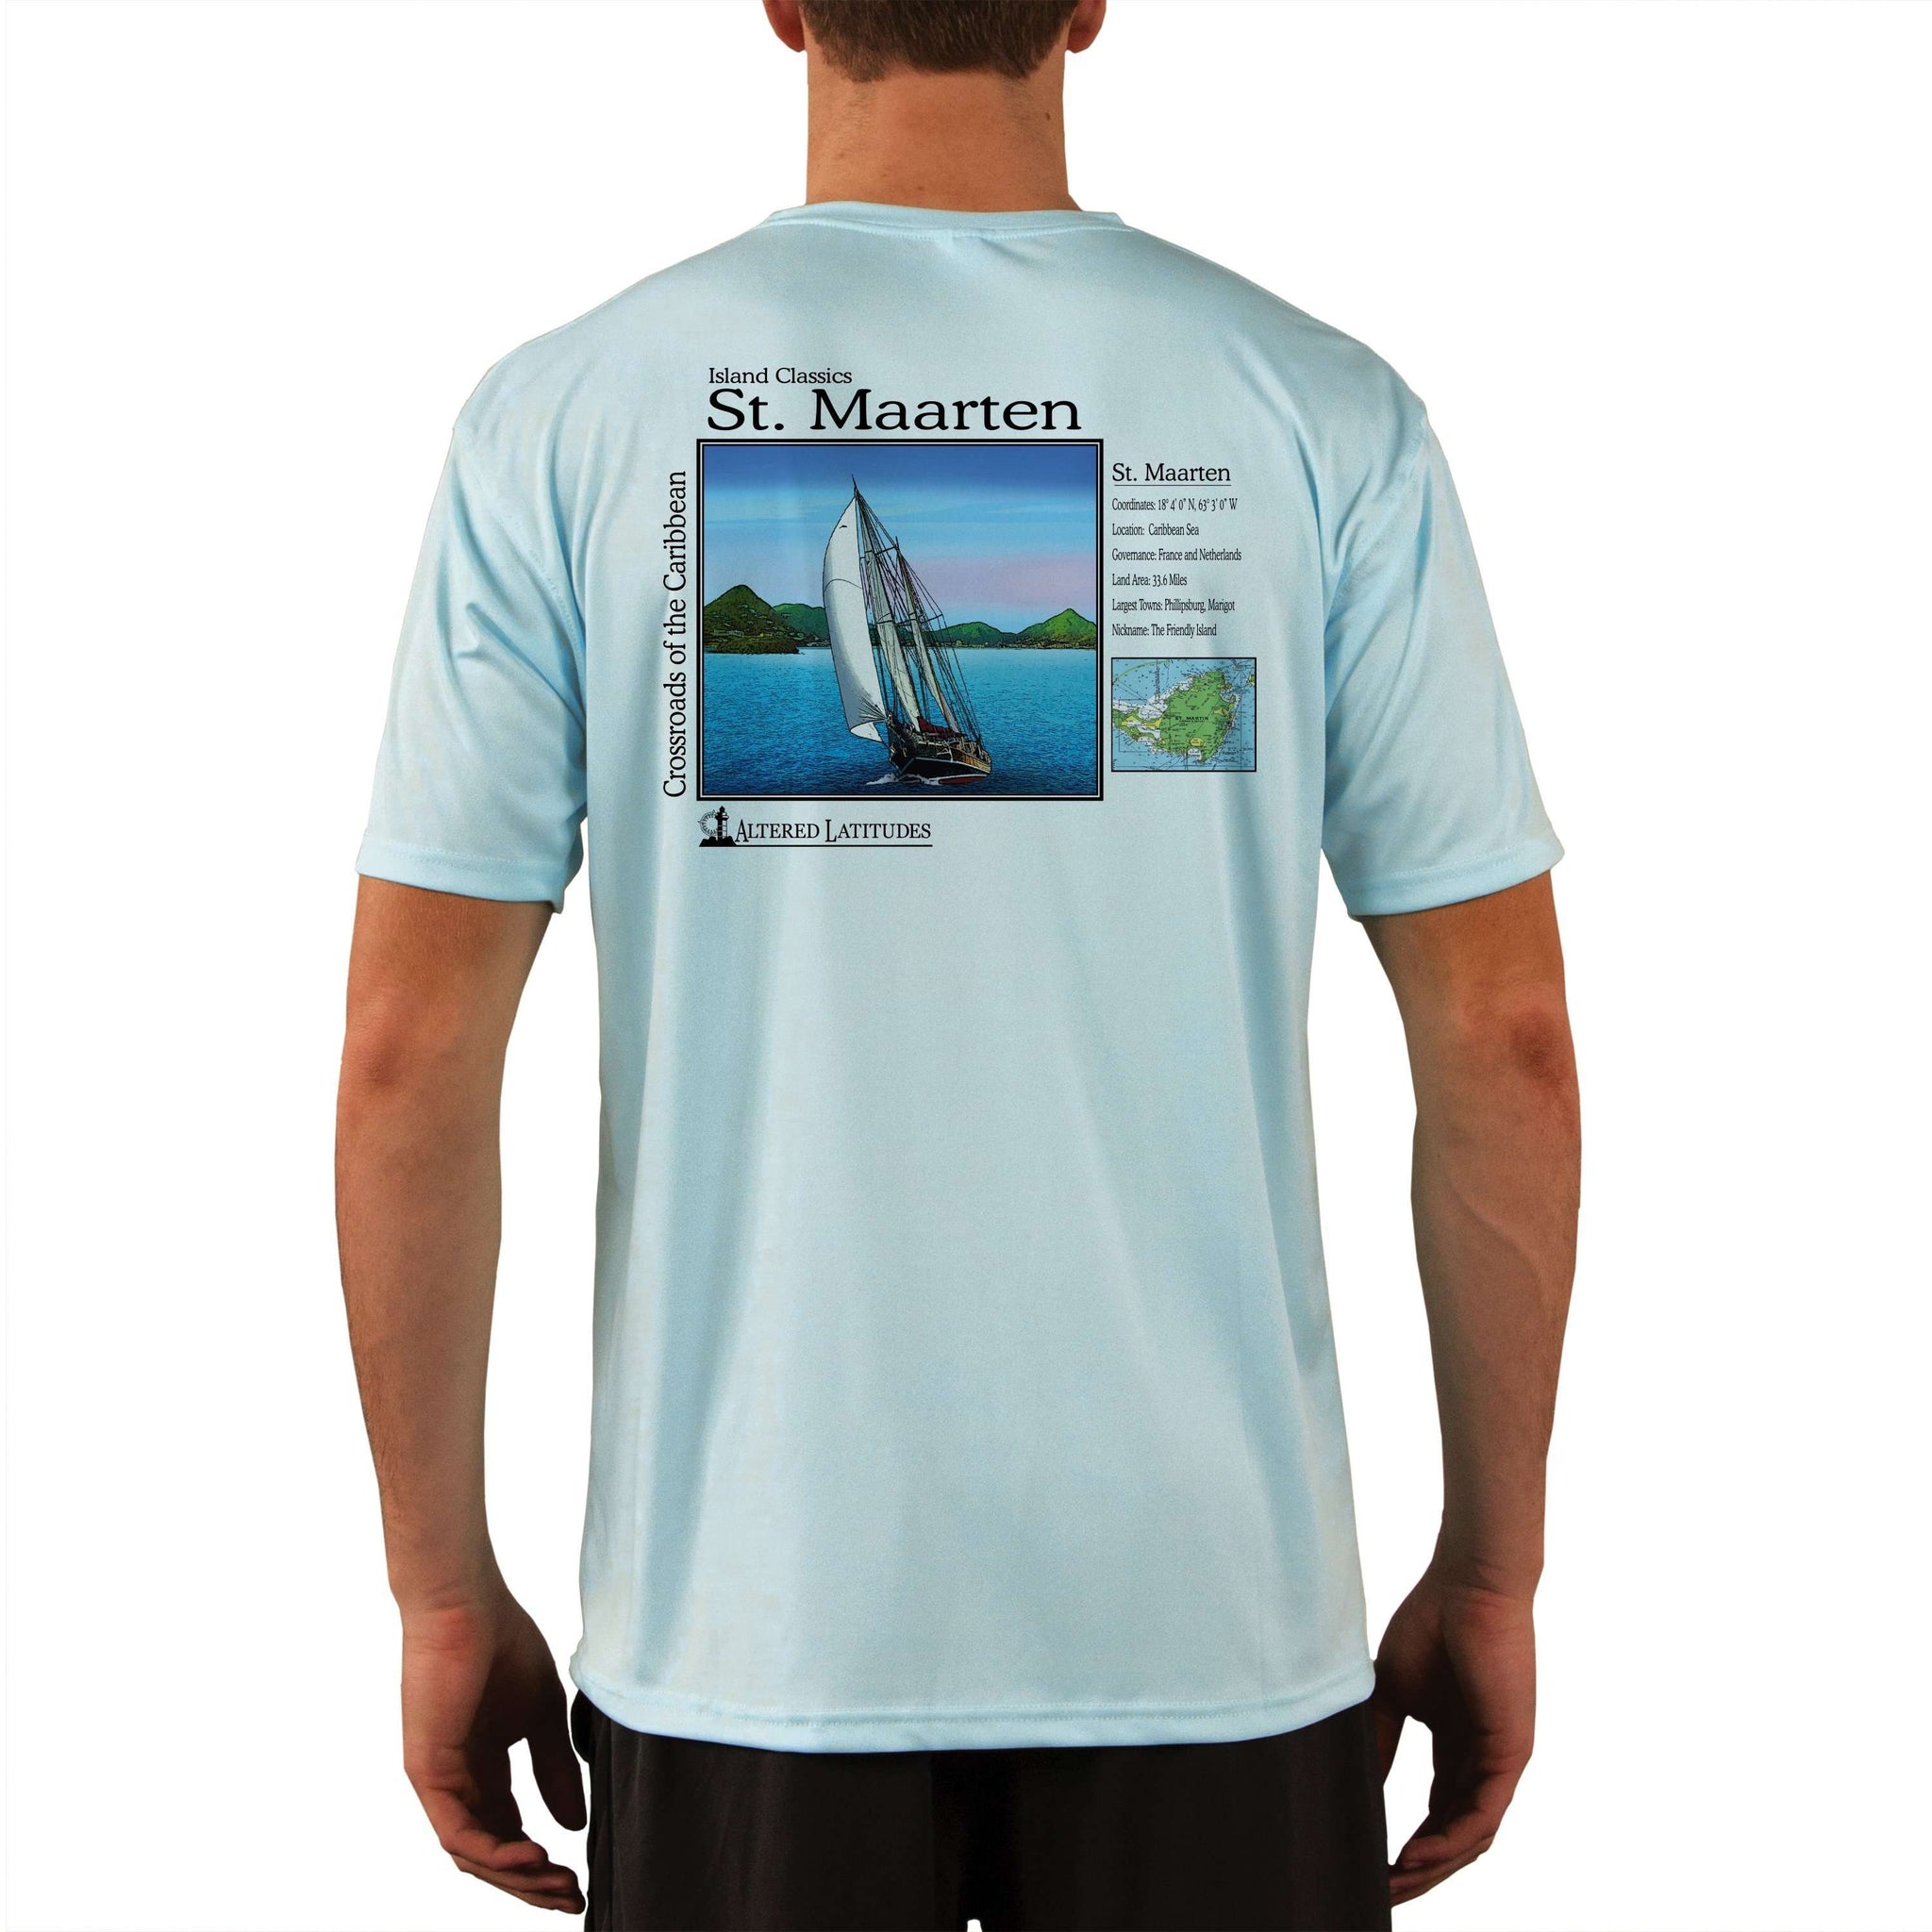 Island Classics St. Maarten Men's UPF 50 Short Sleeve